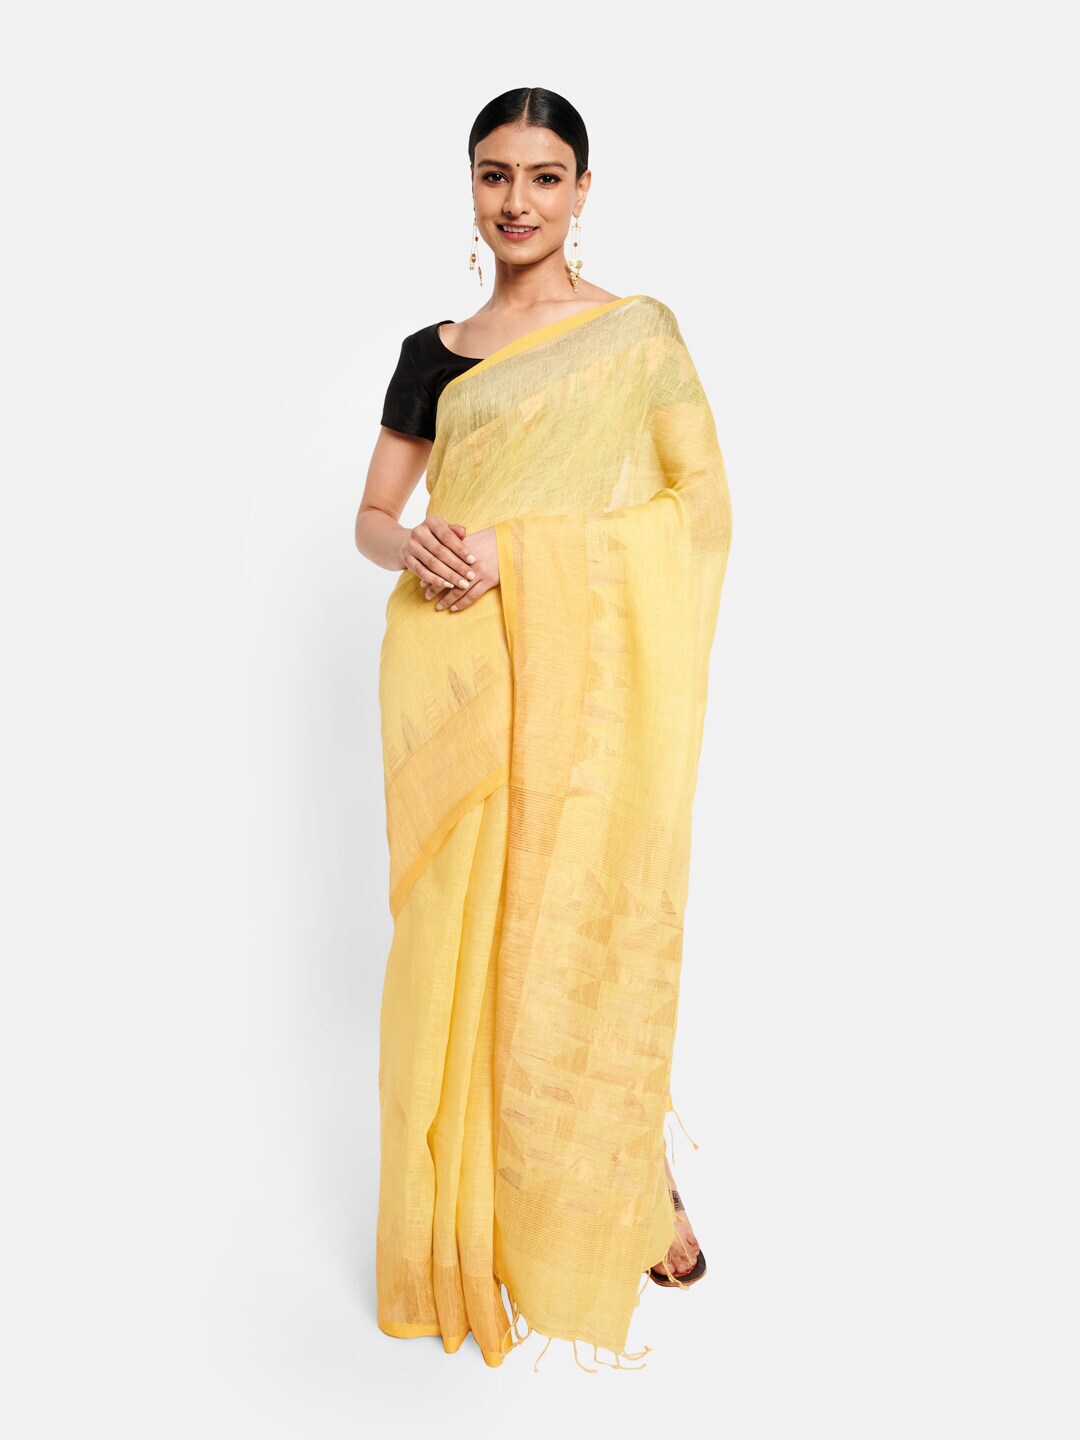 Fabindia Yellow & Beige Pure Linen Jamdani Saree Price in India